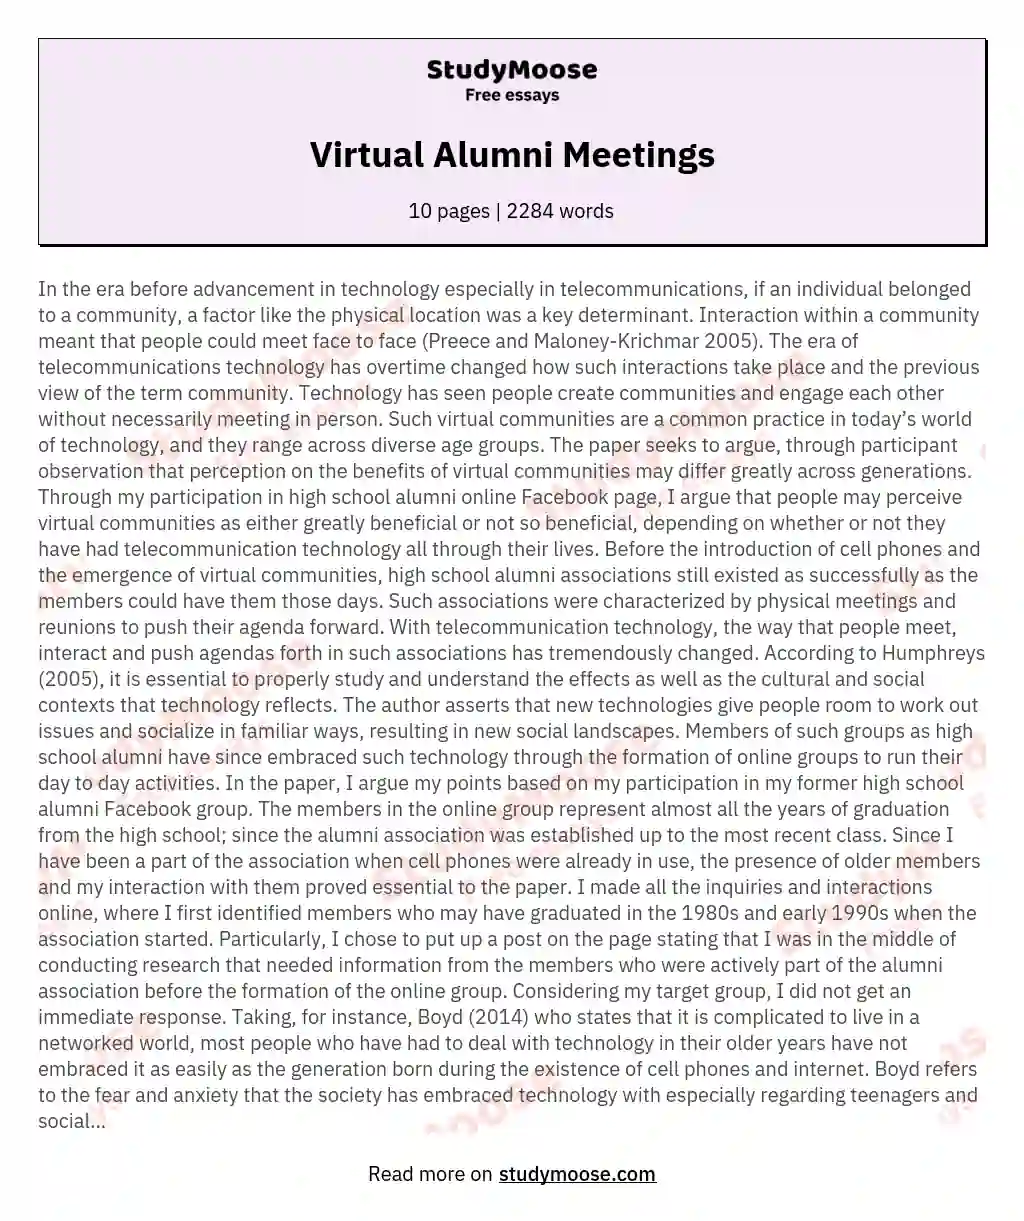 Virtual Alumni Meetings essay